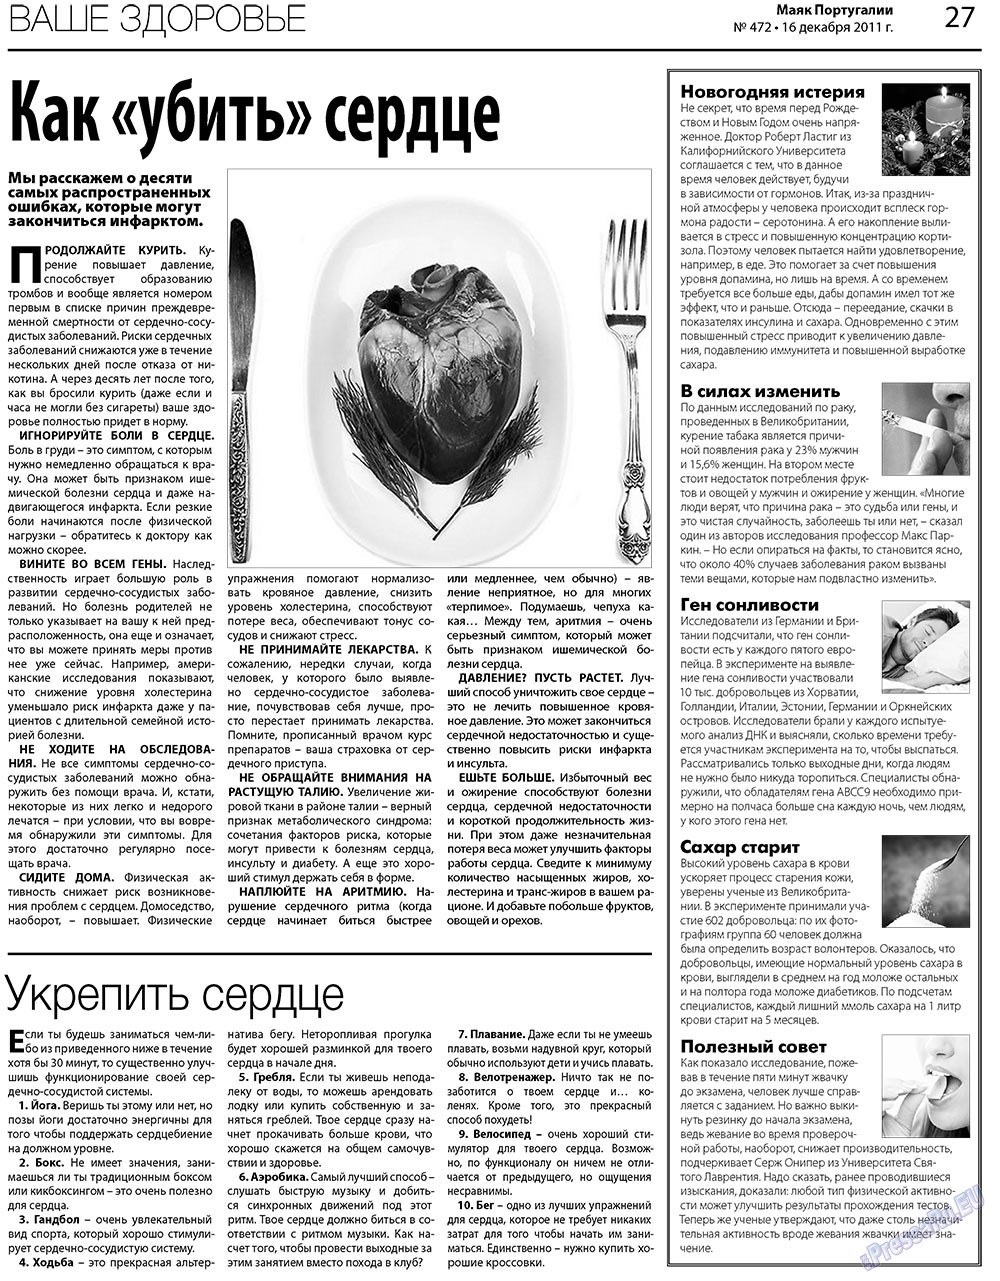 Маяк Португалии, газета. 2011 №472 стр.27